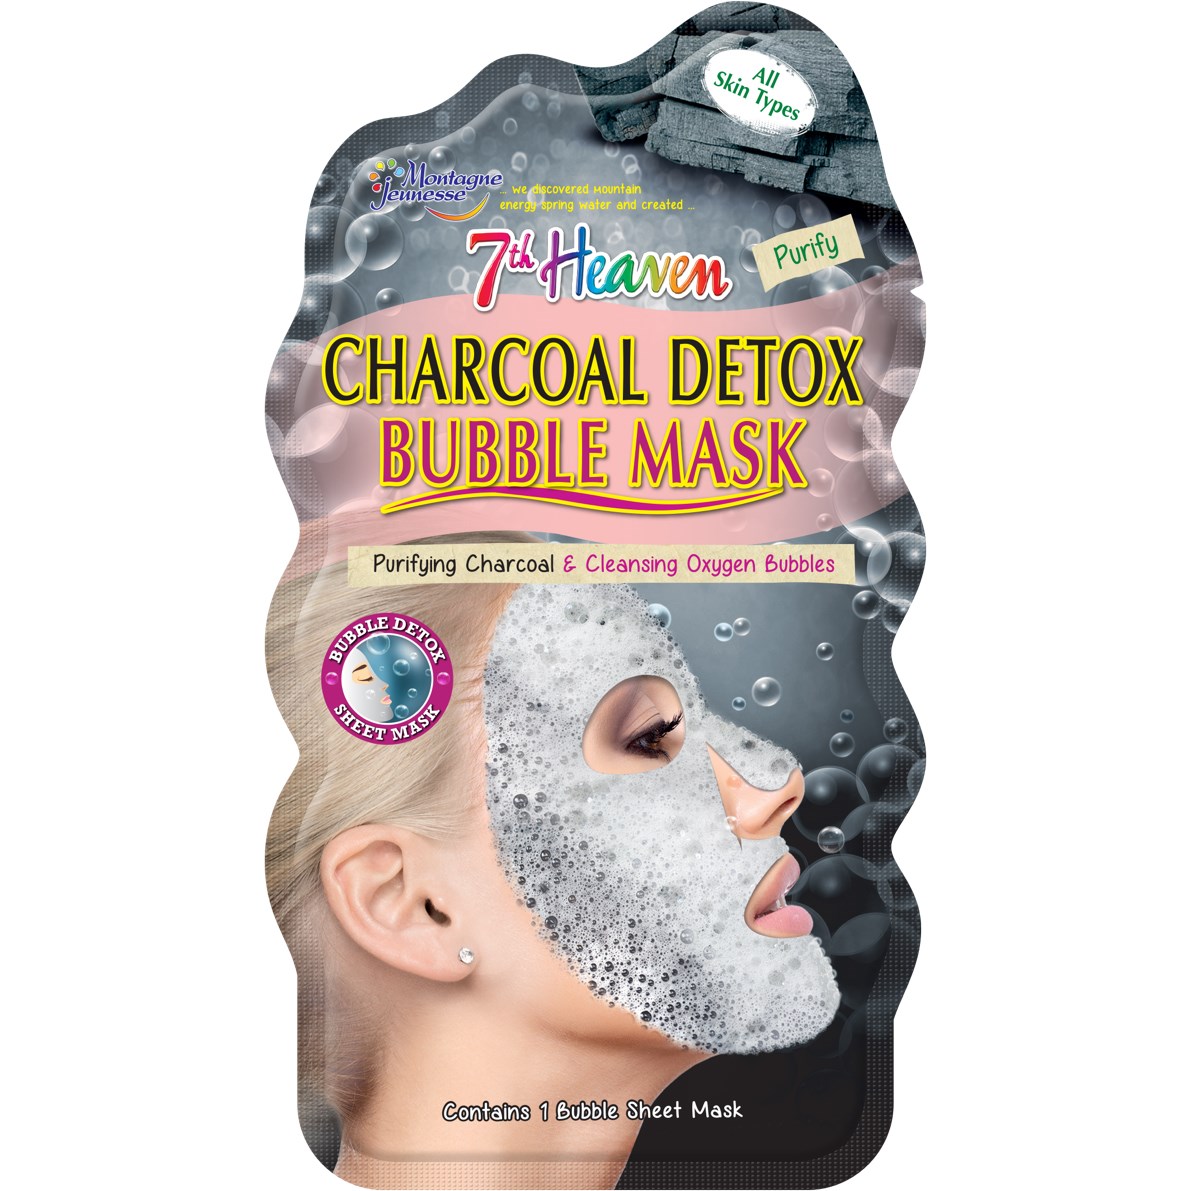 Läs mer om 7th Heaven Charcoal Detox Bubble Mask